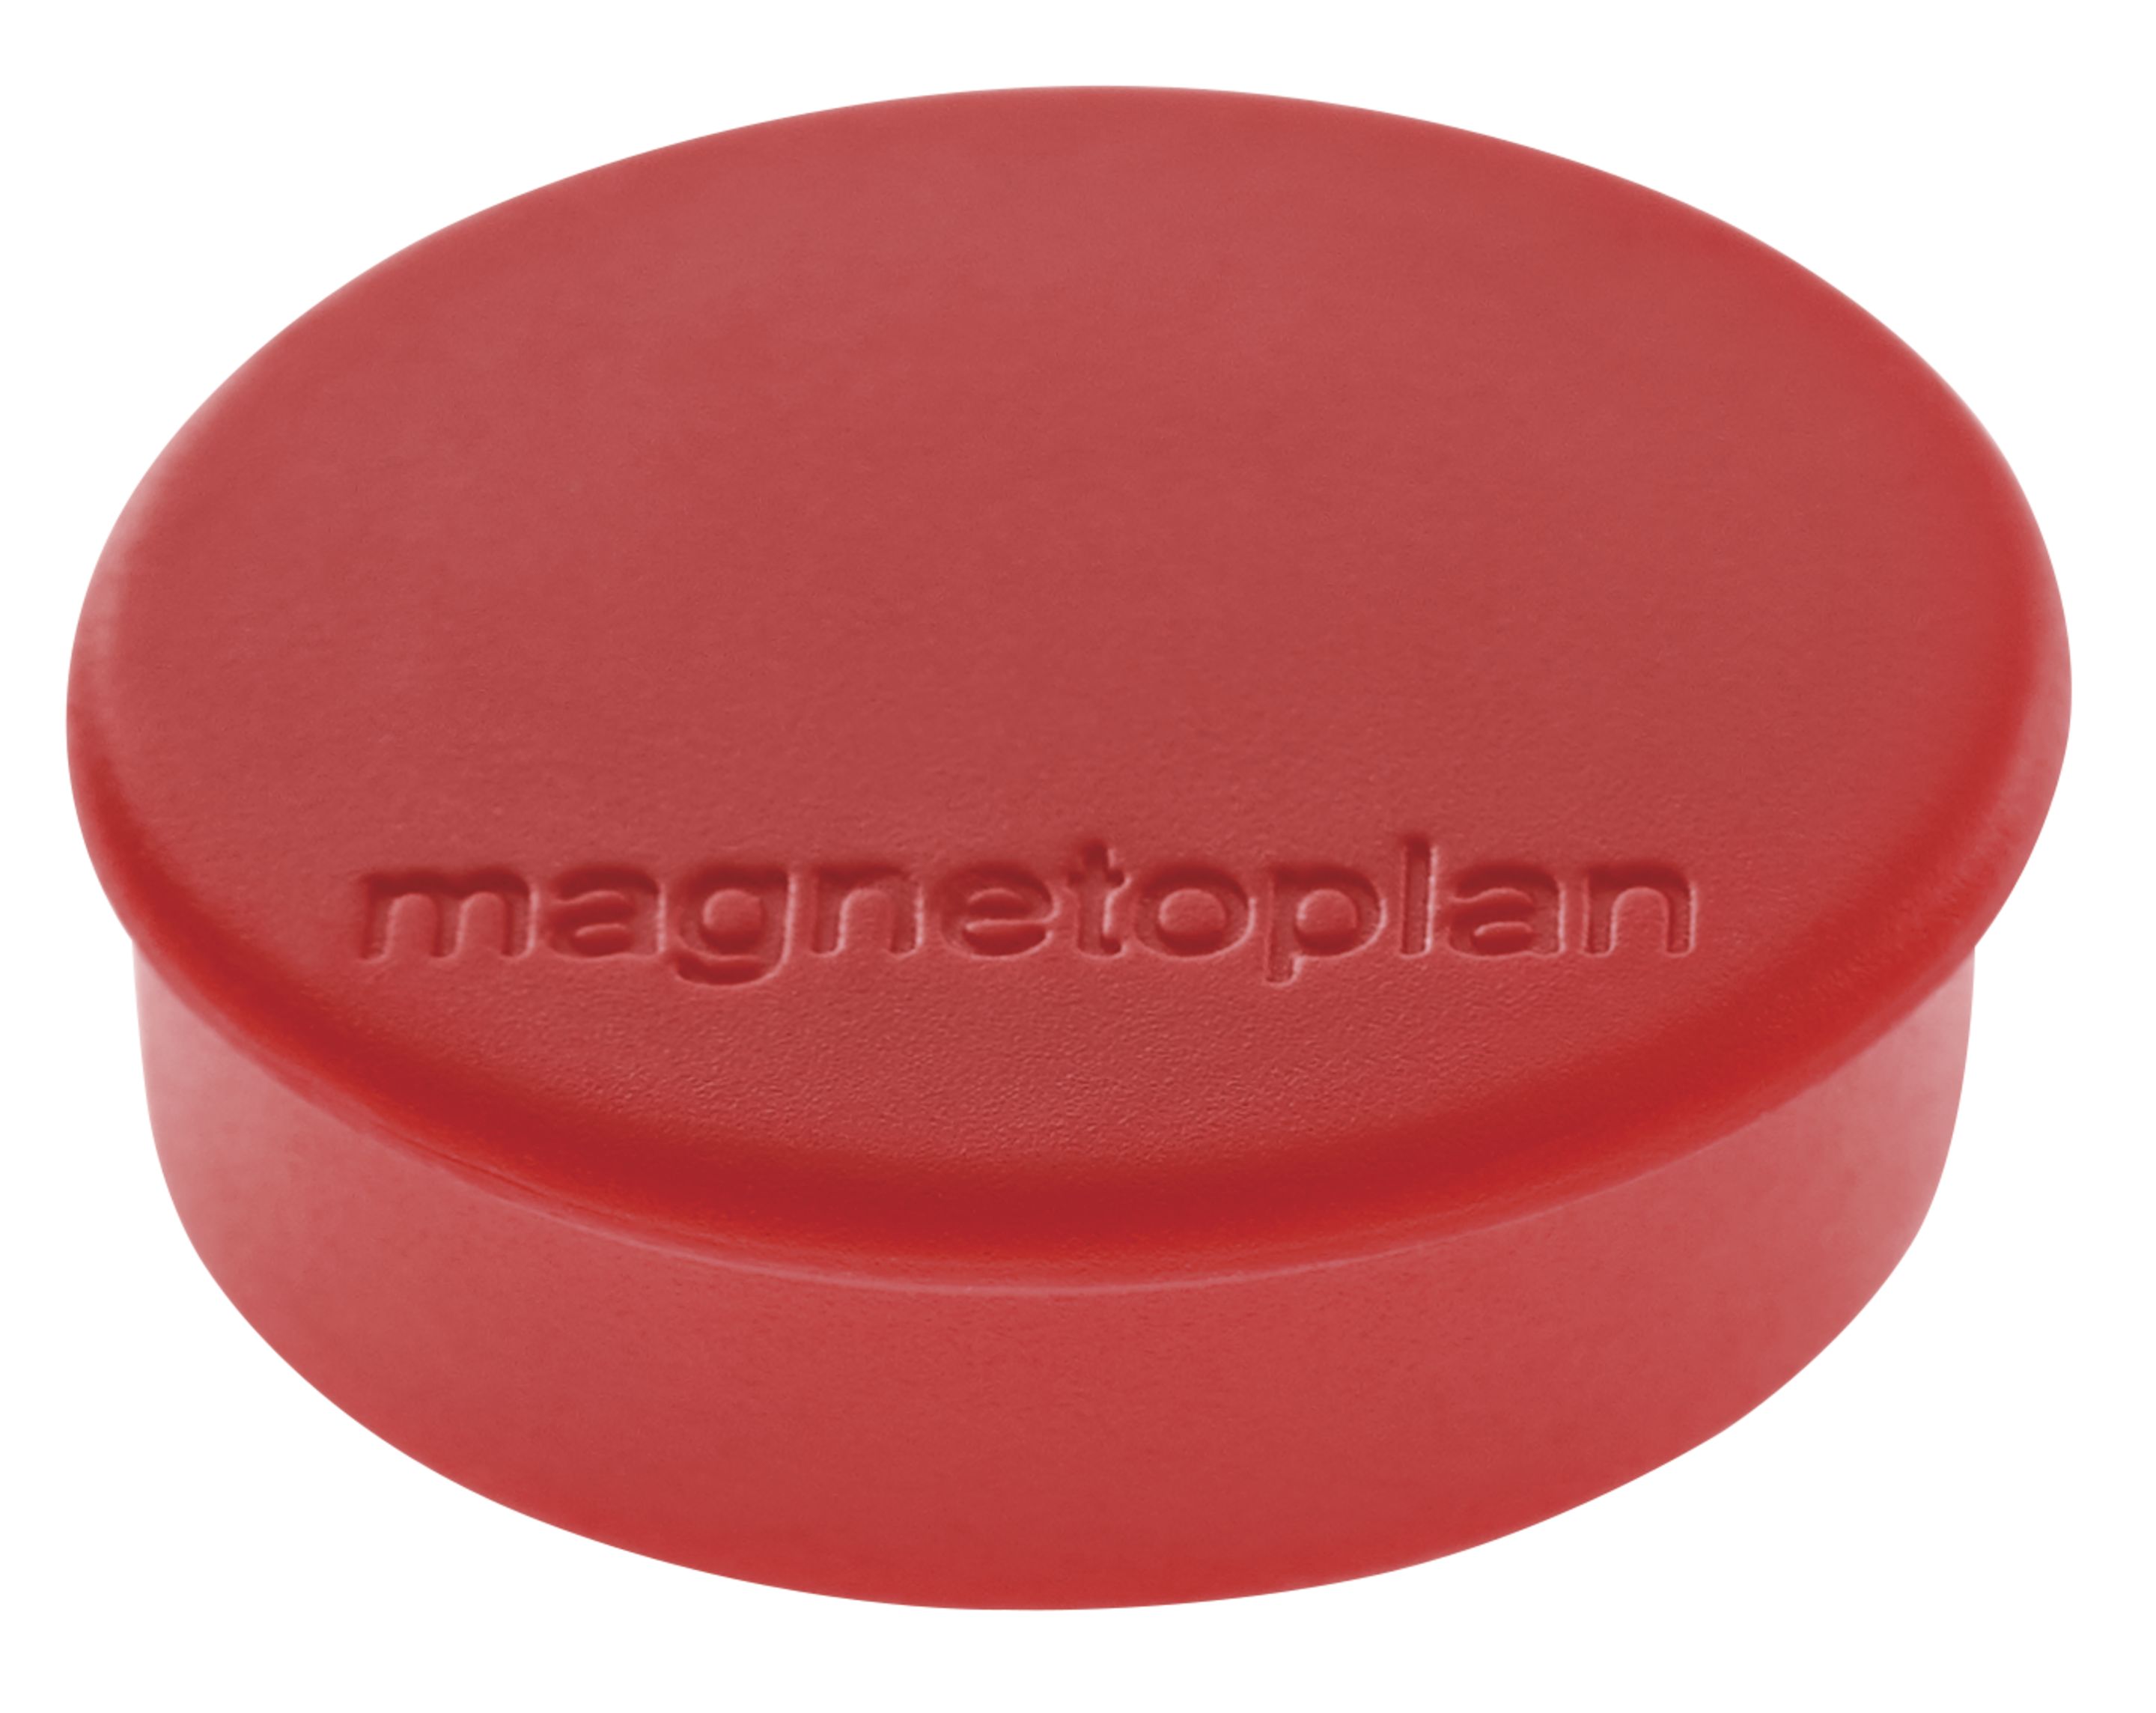 Magnete Discofix Hobby rot 25 mm 10 Stück